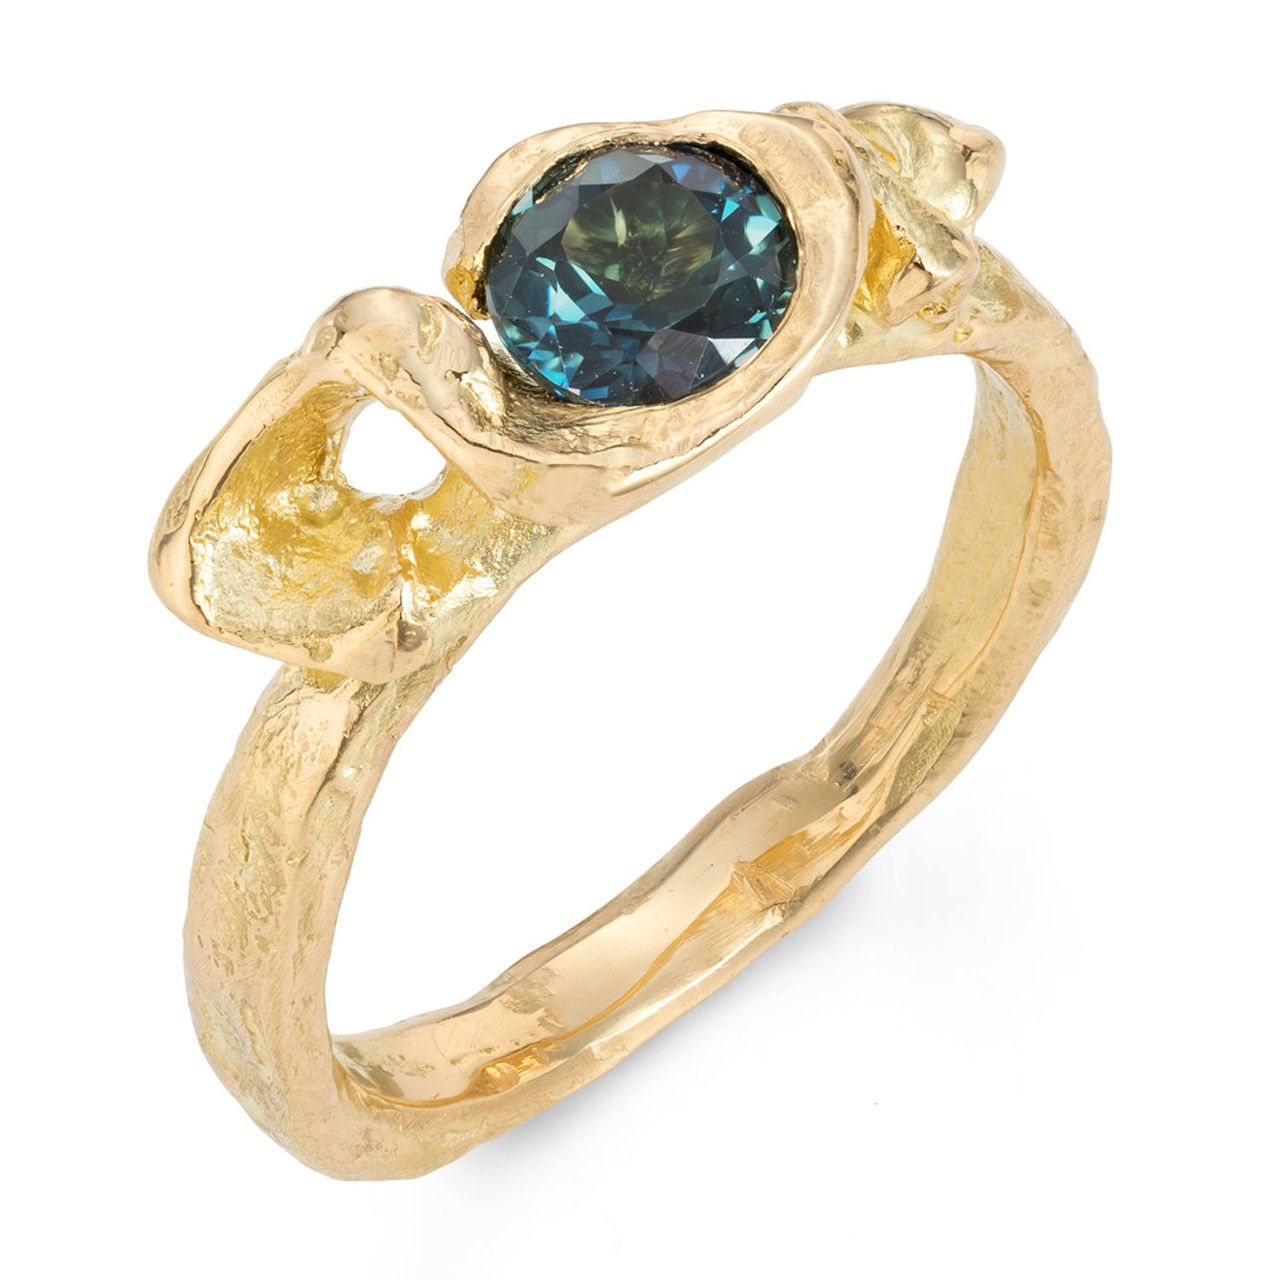 Igneous Cove Sapphire Ring, Emily Nixon, tomfoolery